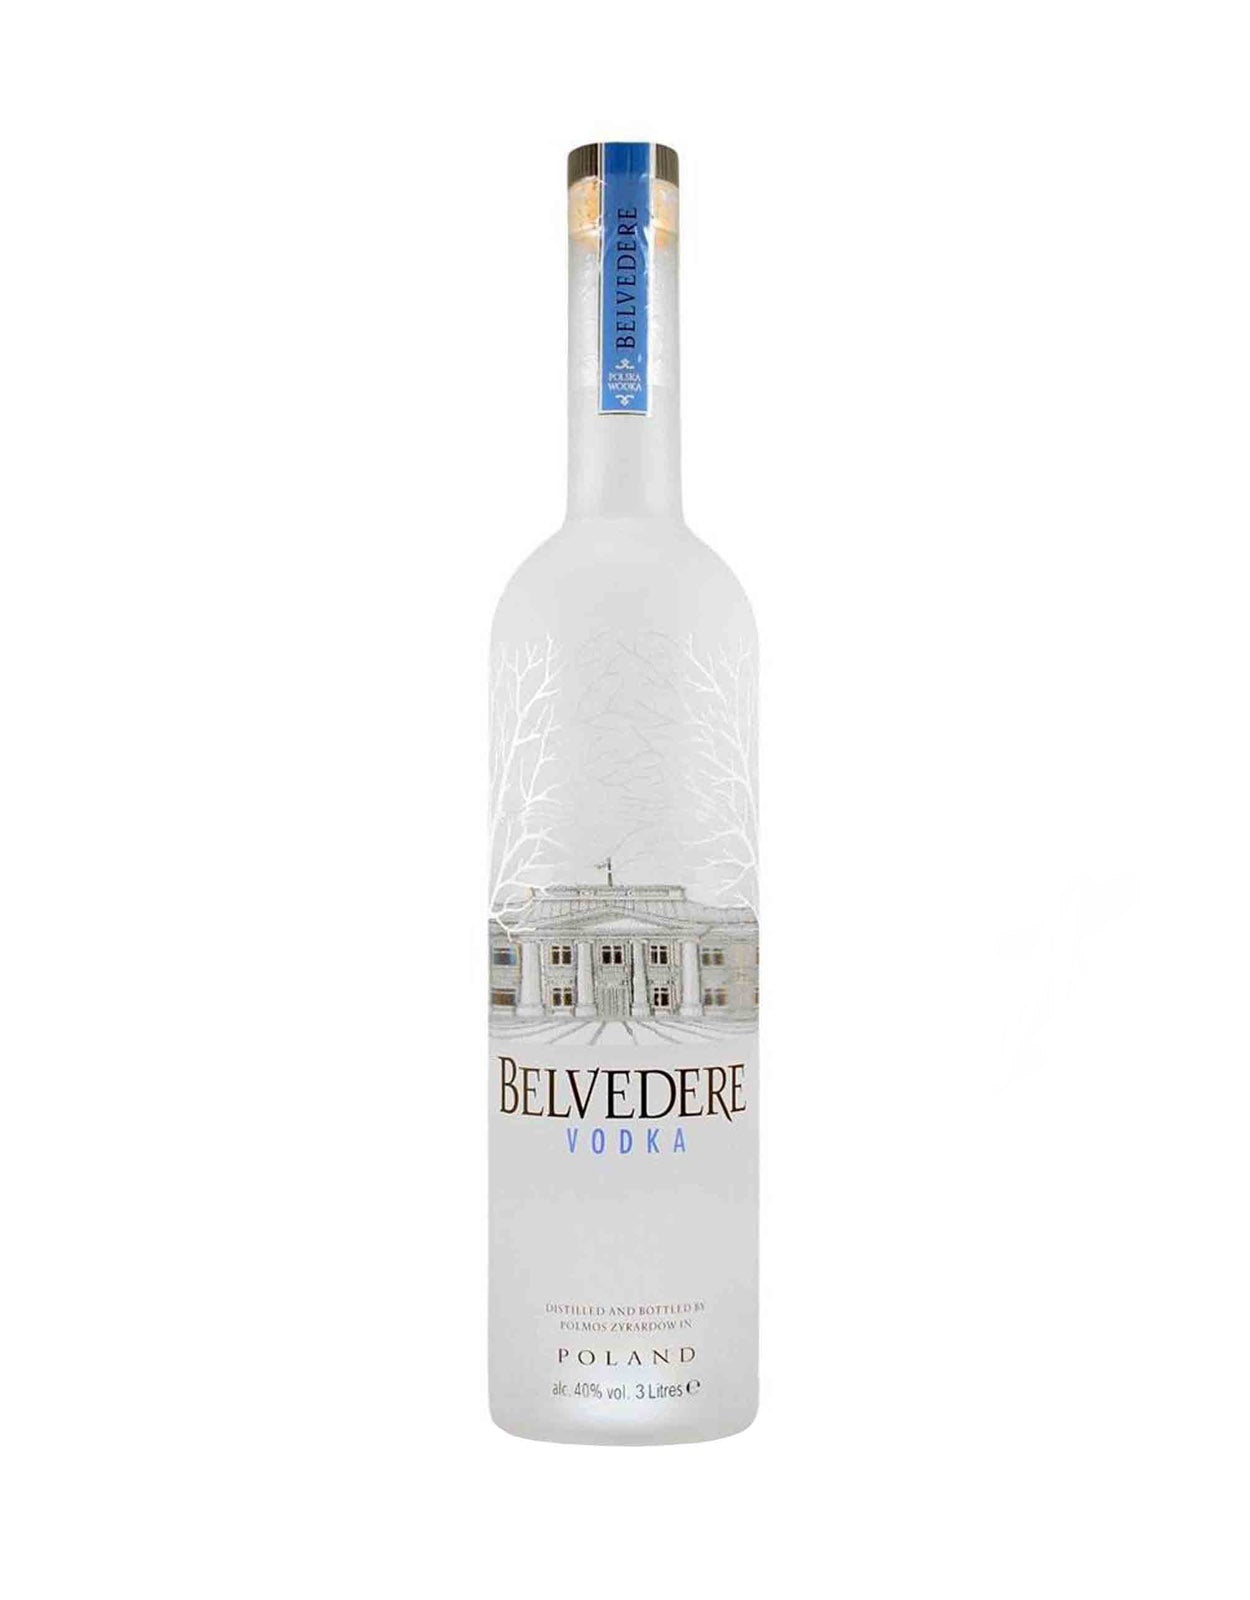 Belvedere Vodka Presents Daniel Craig 